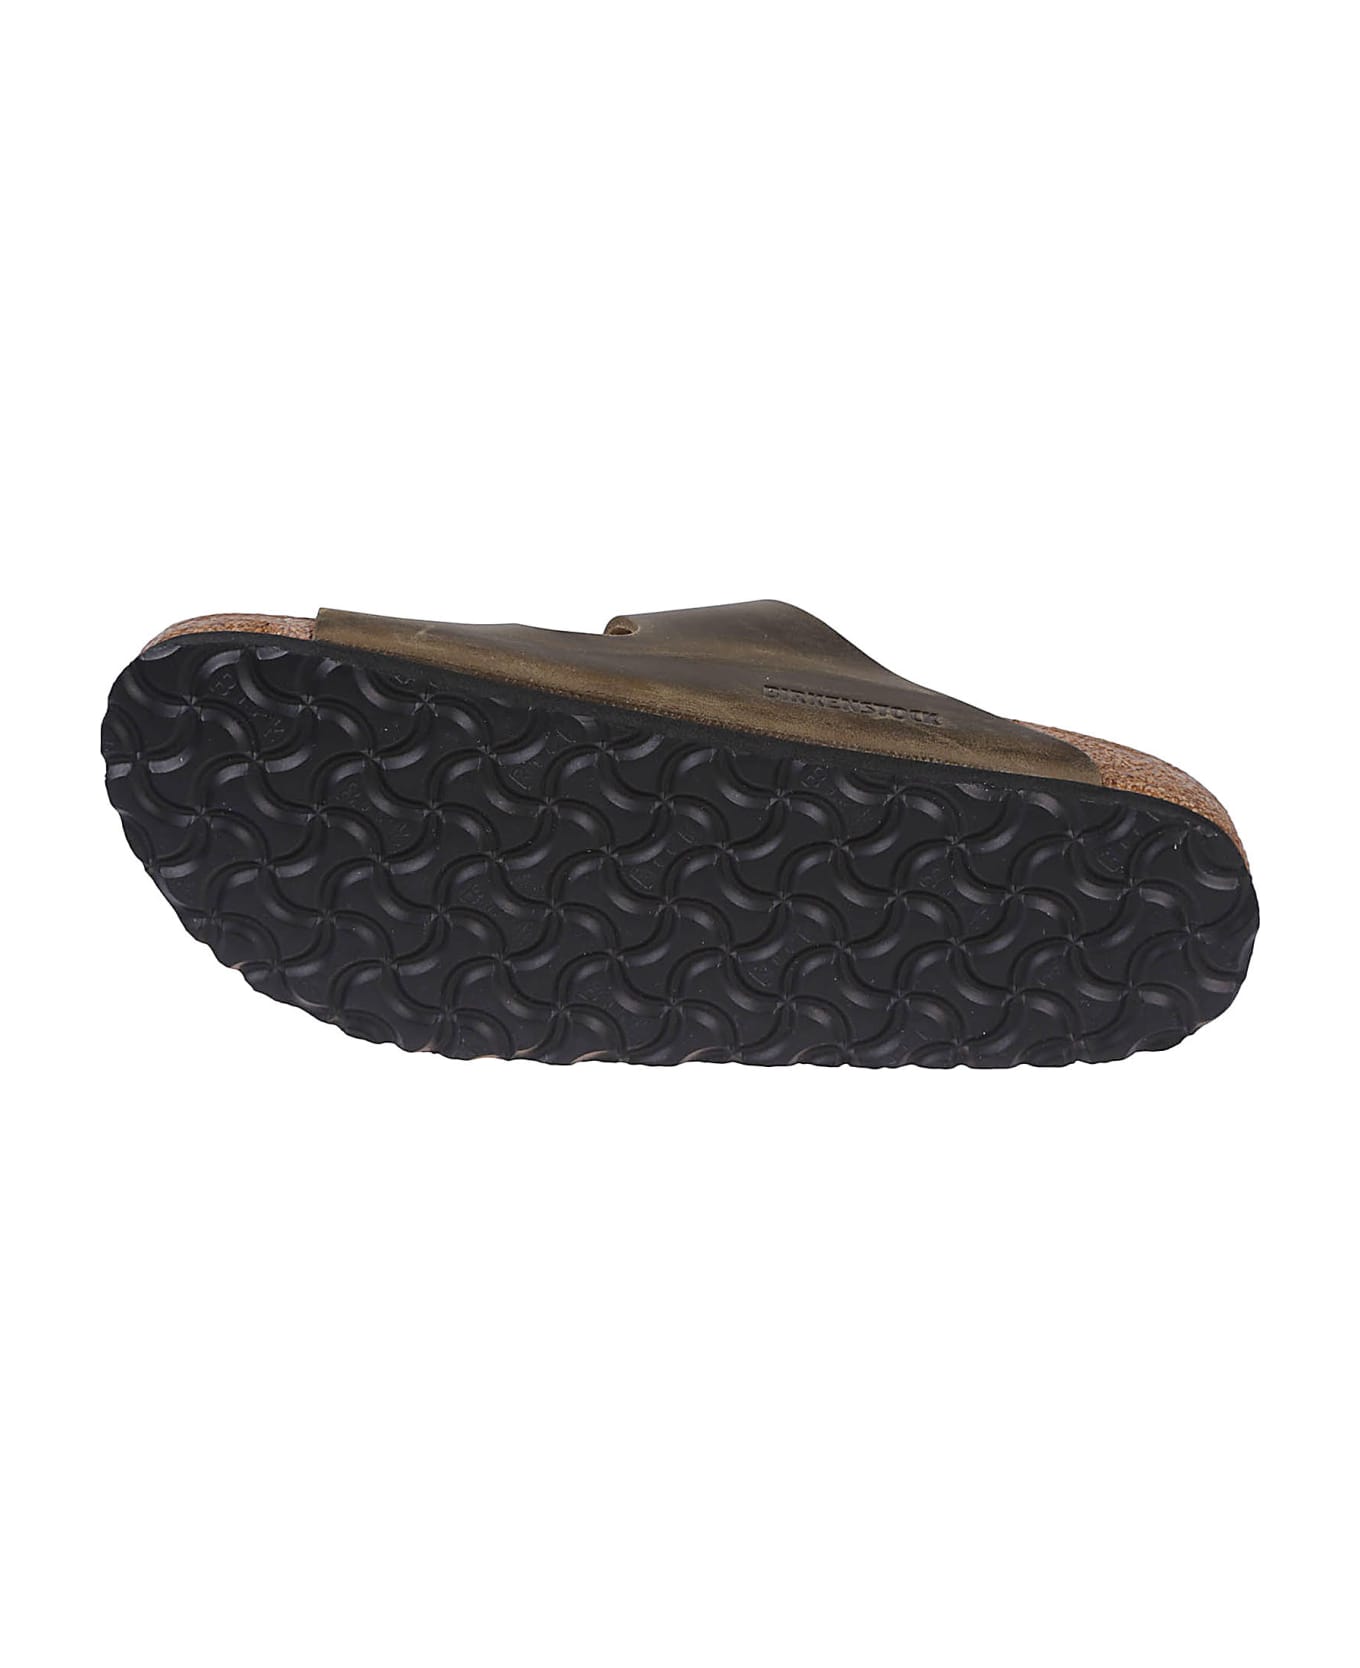 Birkenstock Arizona Sandals - Faded Khaki サンダル